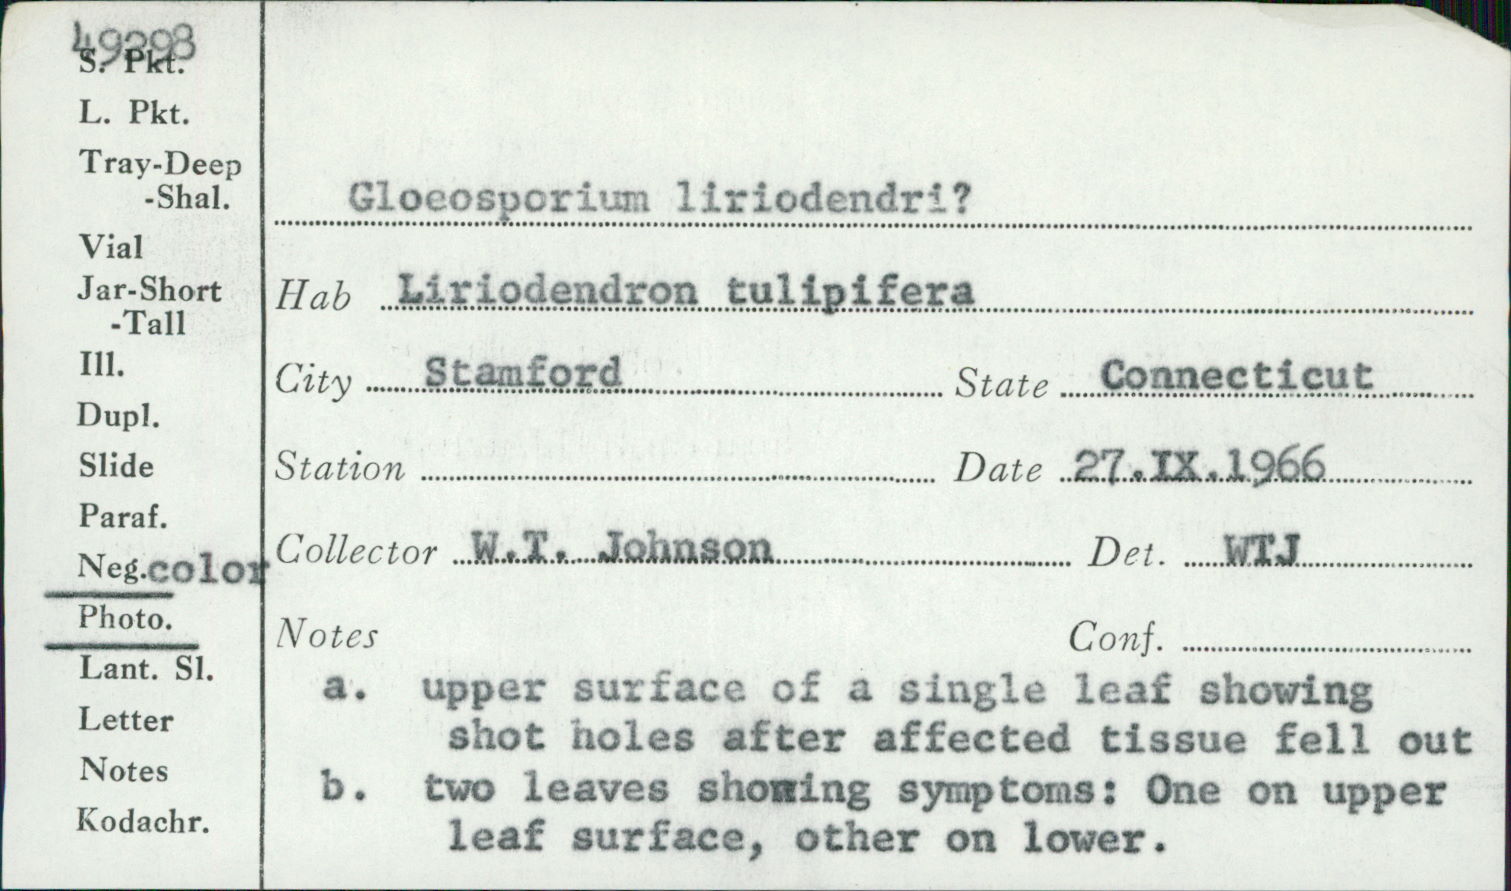 Gloeosporium liriodendri image